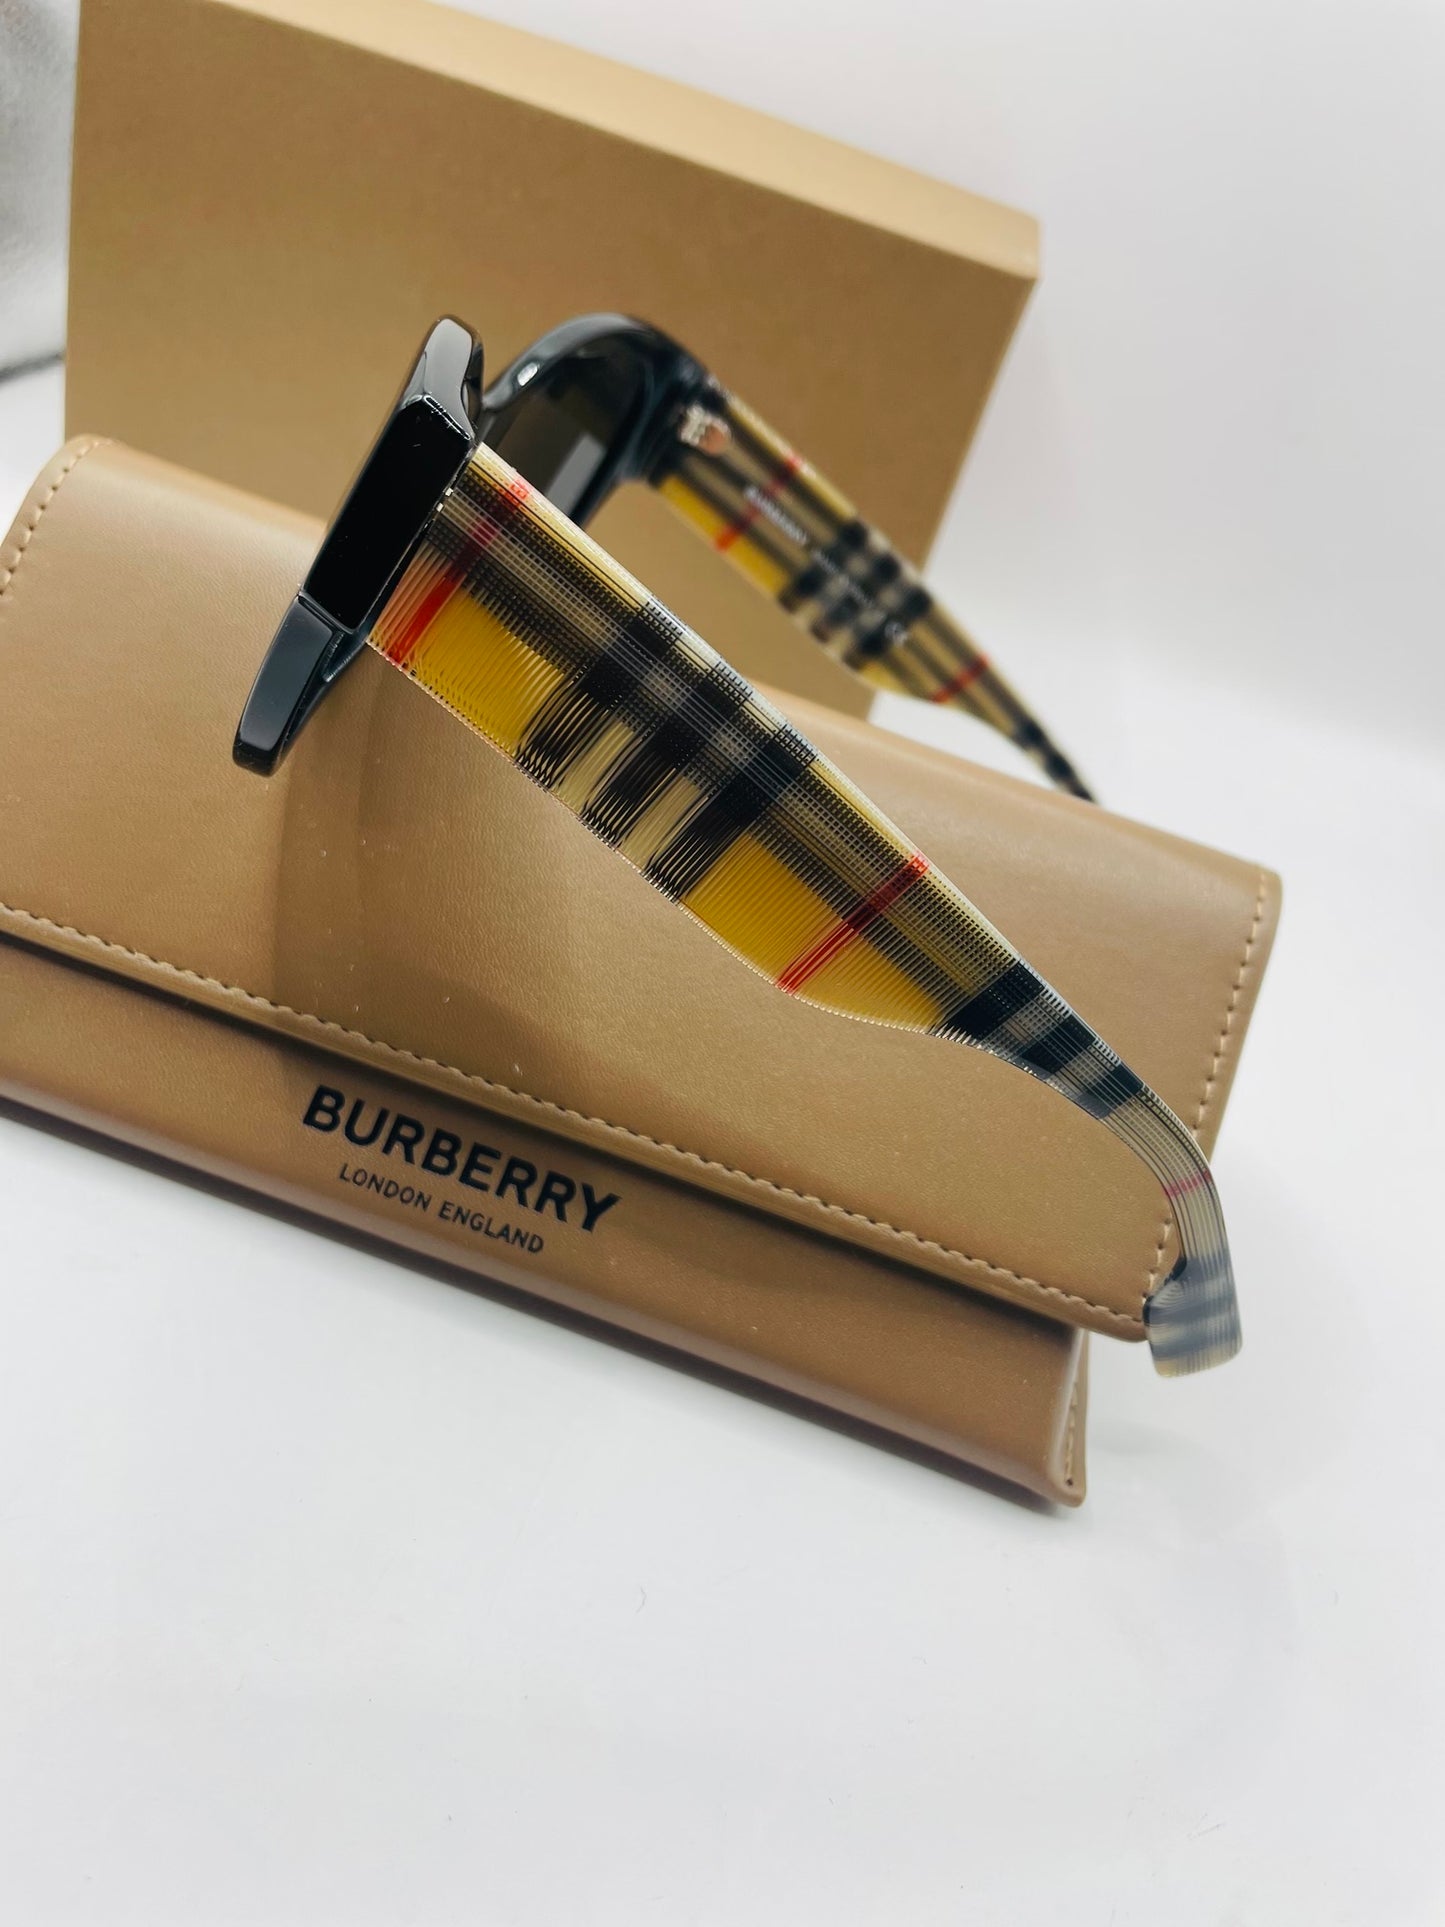 Burberry sunglass